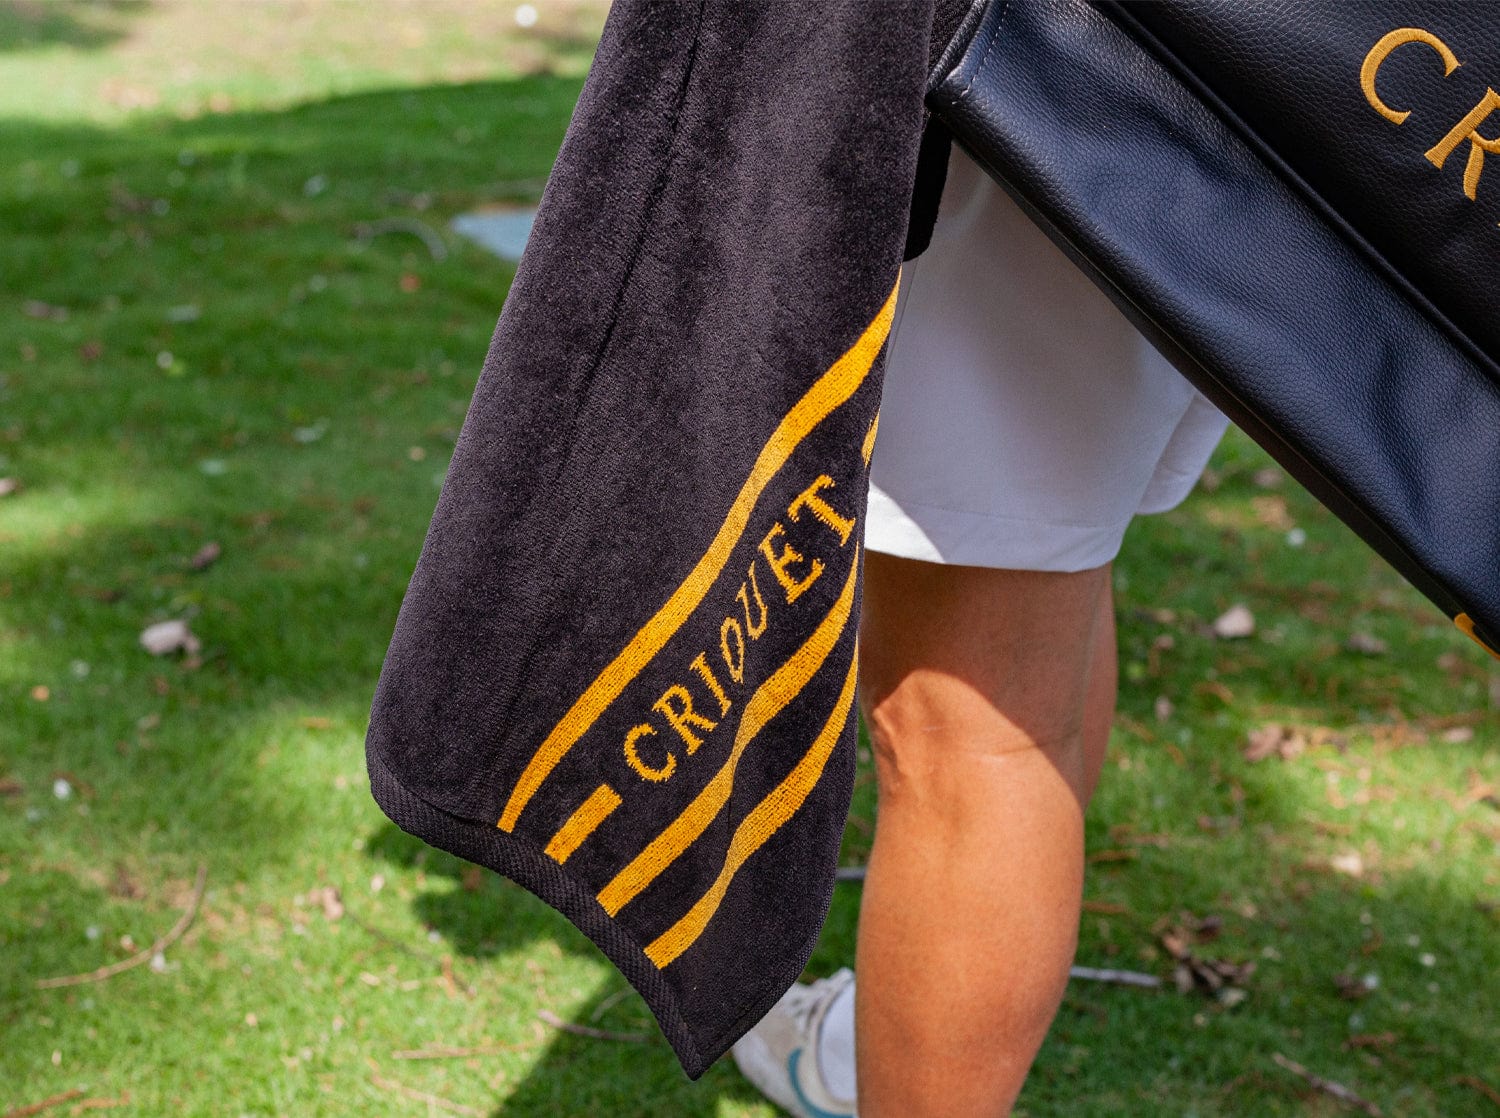 Terry Jacquard Golf Towel - Criquet Stripe - Black/Gold - Secondary